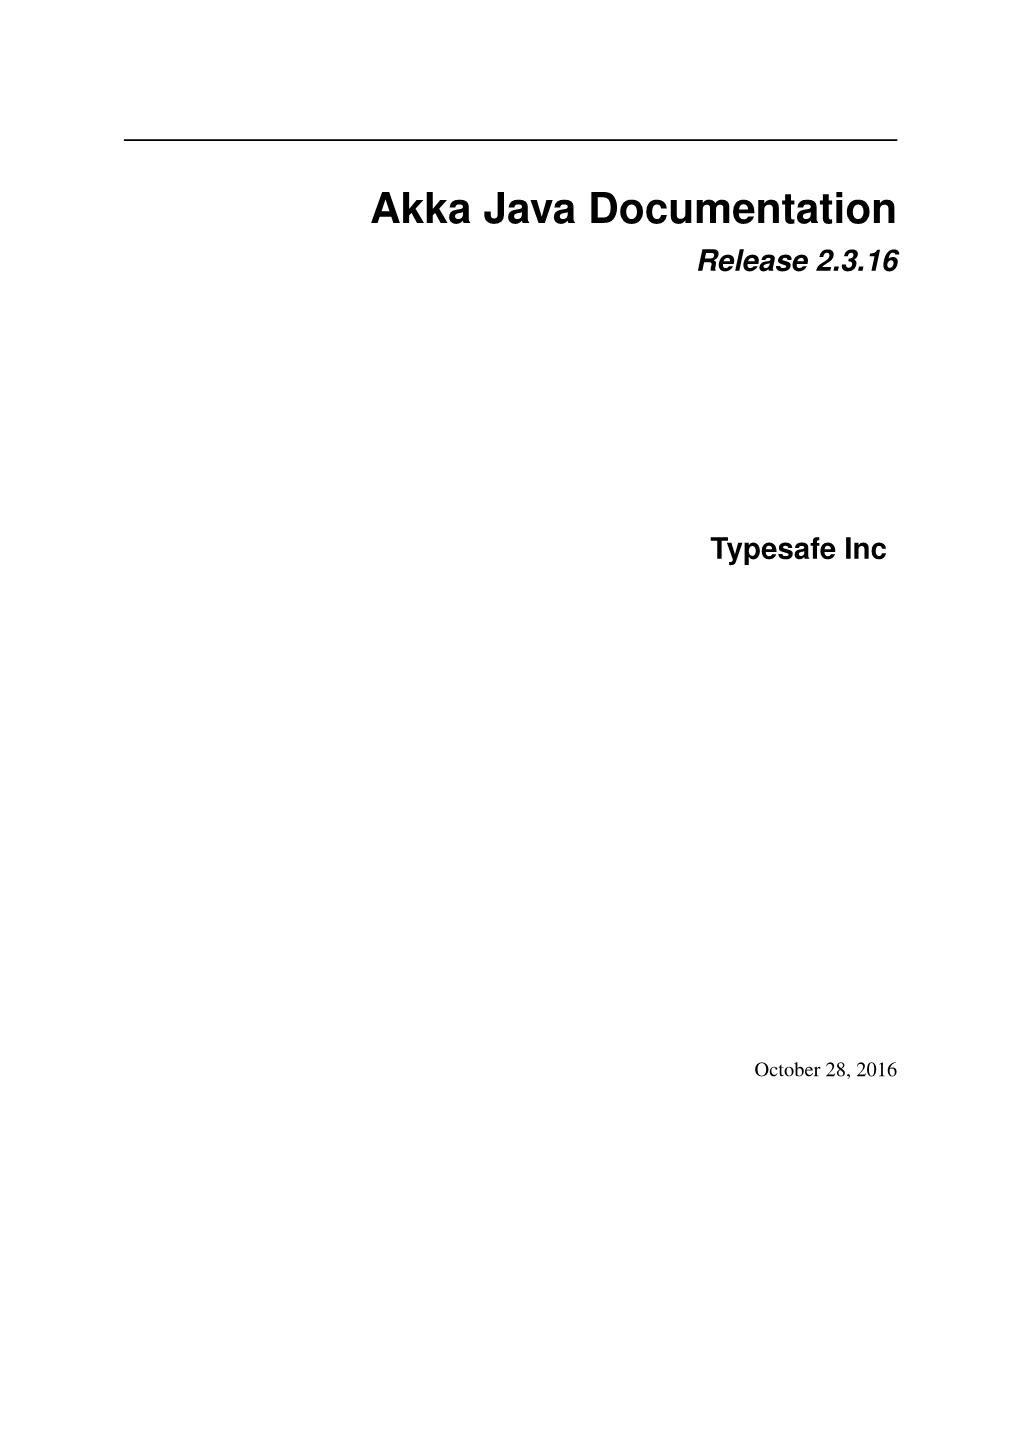 Akka Java Documentation Release 2.3.16